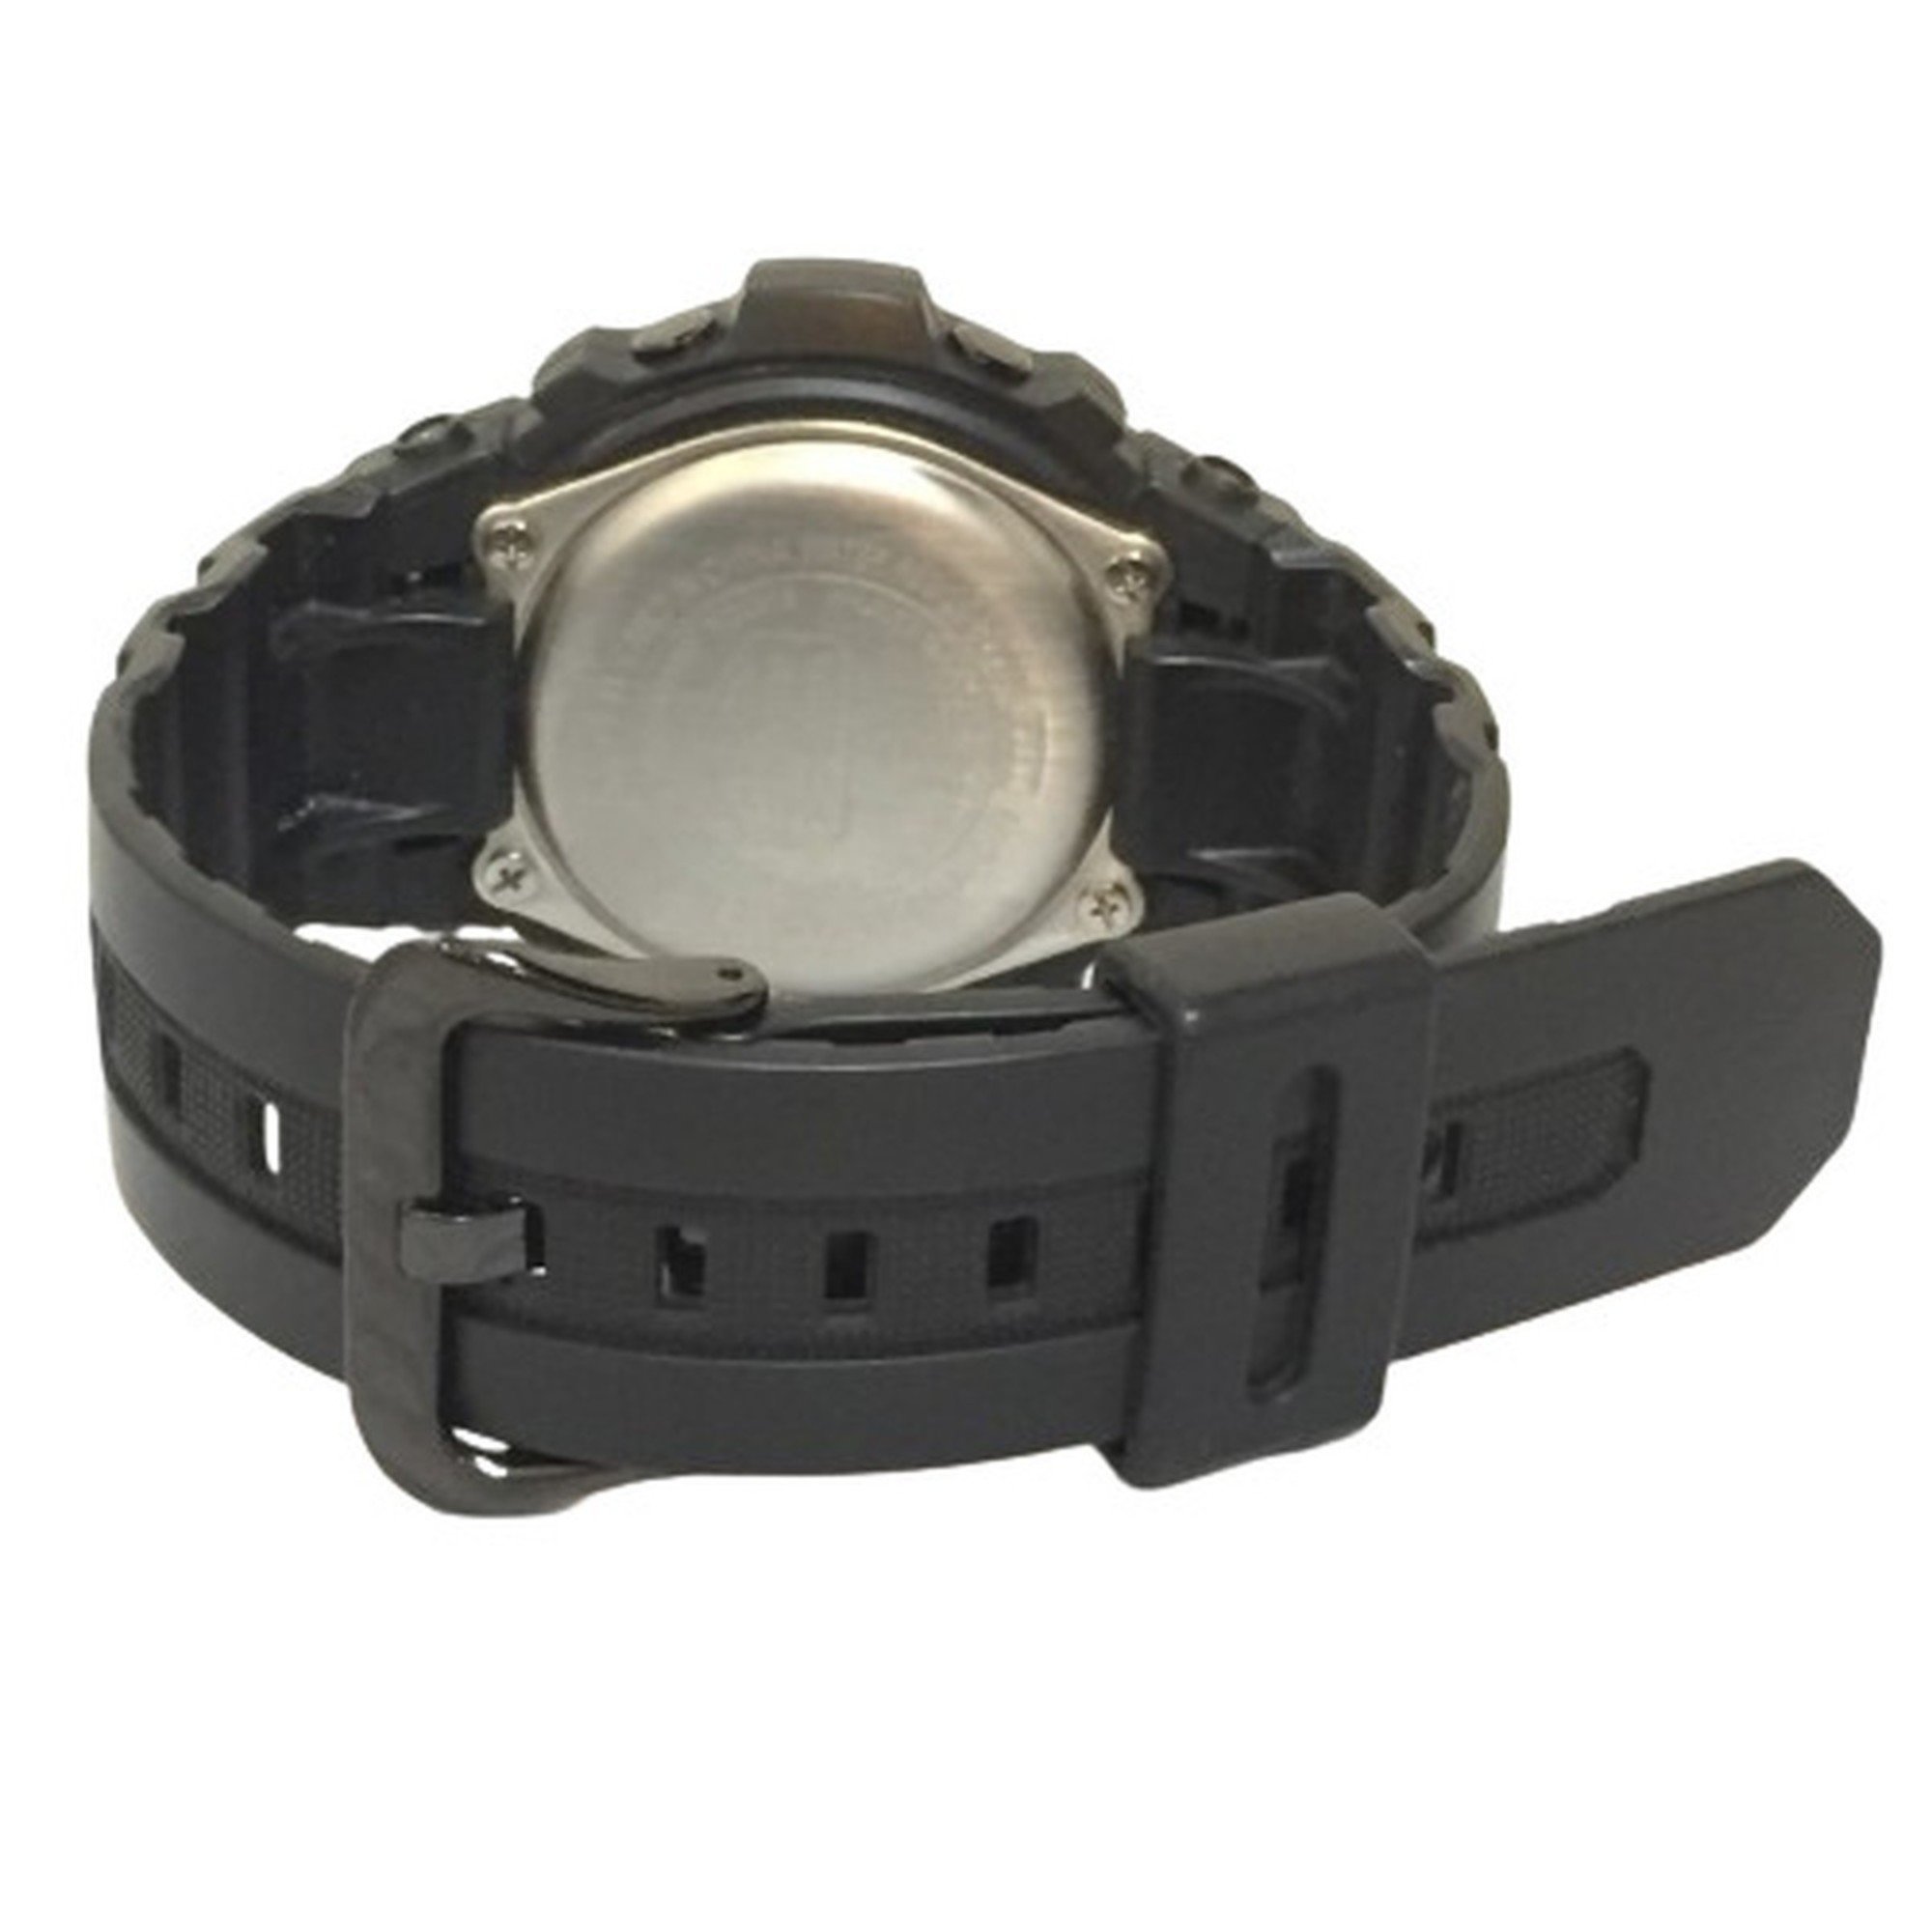 G-SHOCK CASIO AWG-M100SBB-1AJF Analog-Digital Digital-Analog Tough Solar Watch Black Kaizuka Store ITGO2T9NEHWA RK1185D